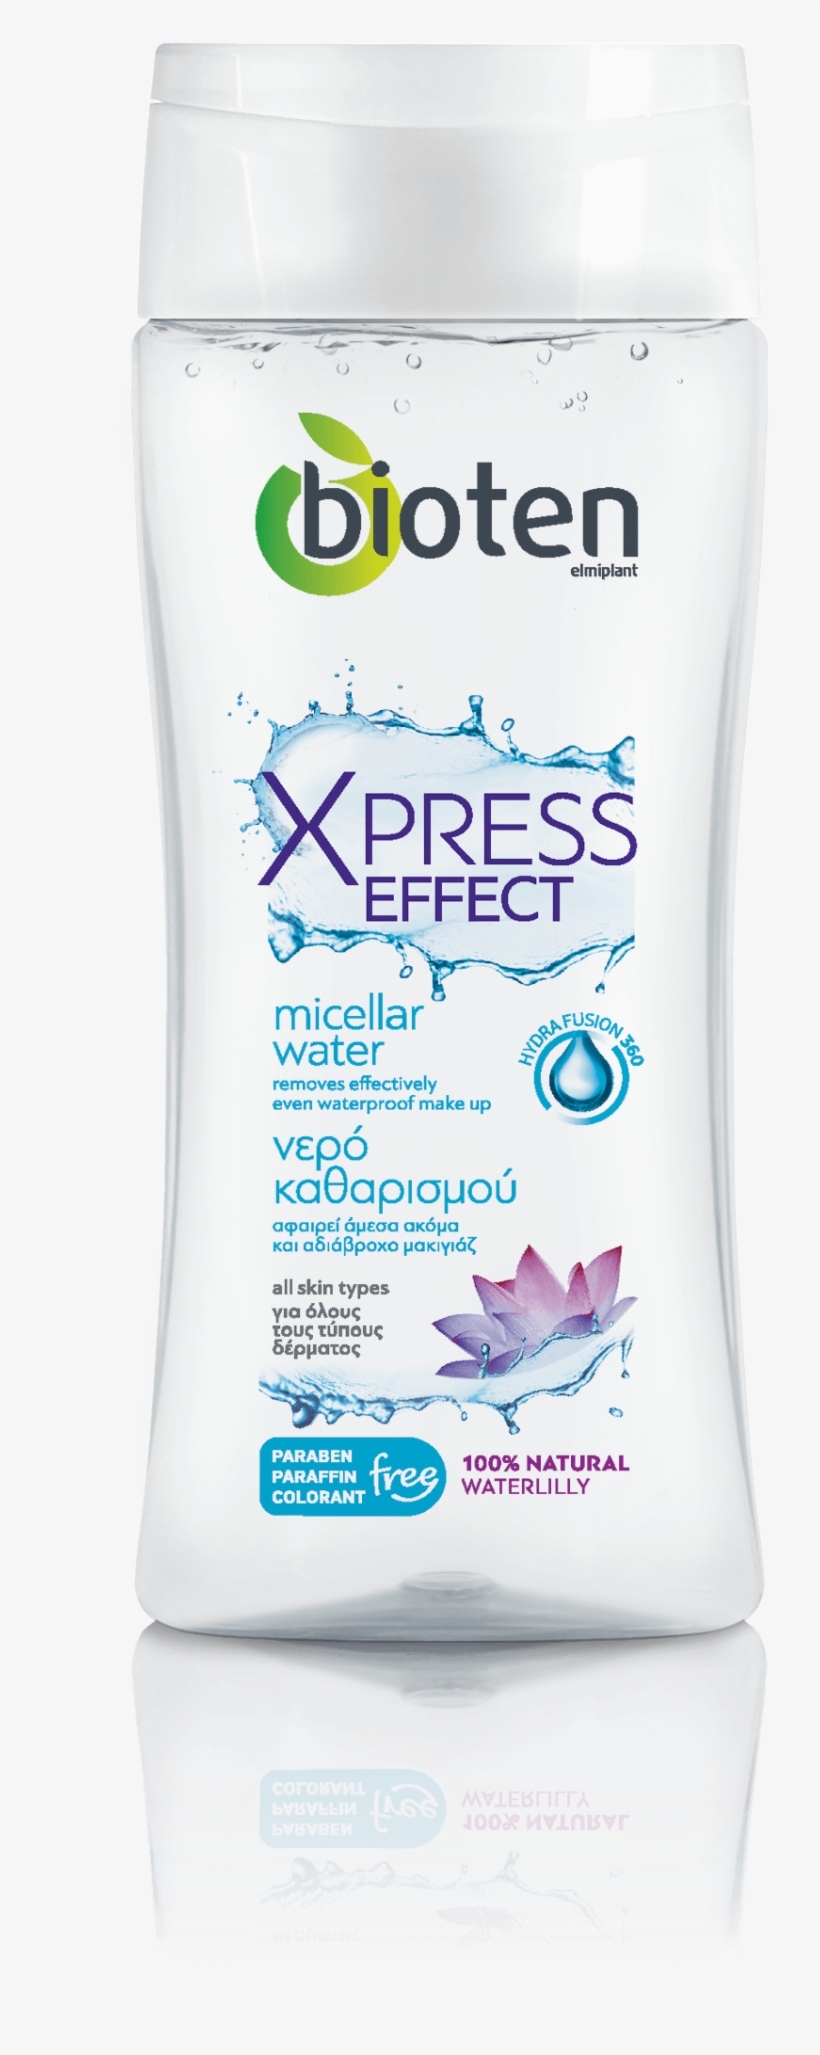 Xpress Effect Micellar Water 200ml - Bioten Skin Repair - Anti-ageing Night Cream, transparent png #3159616